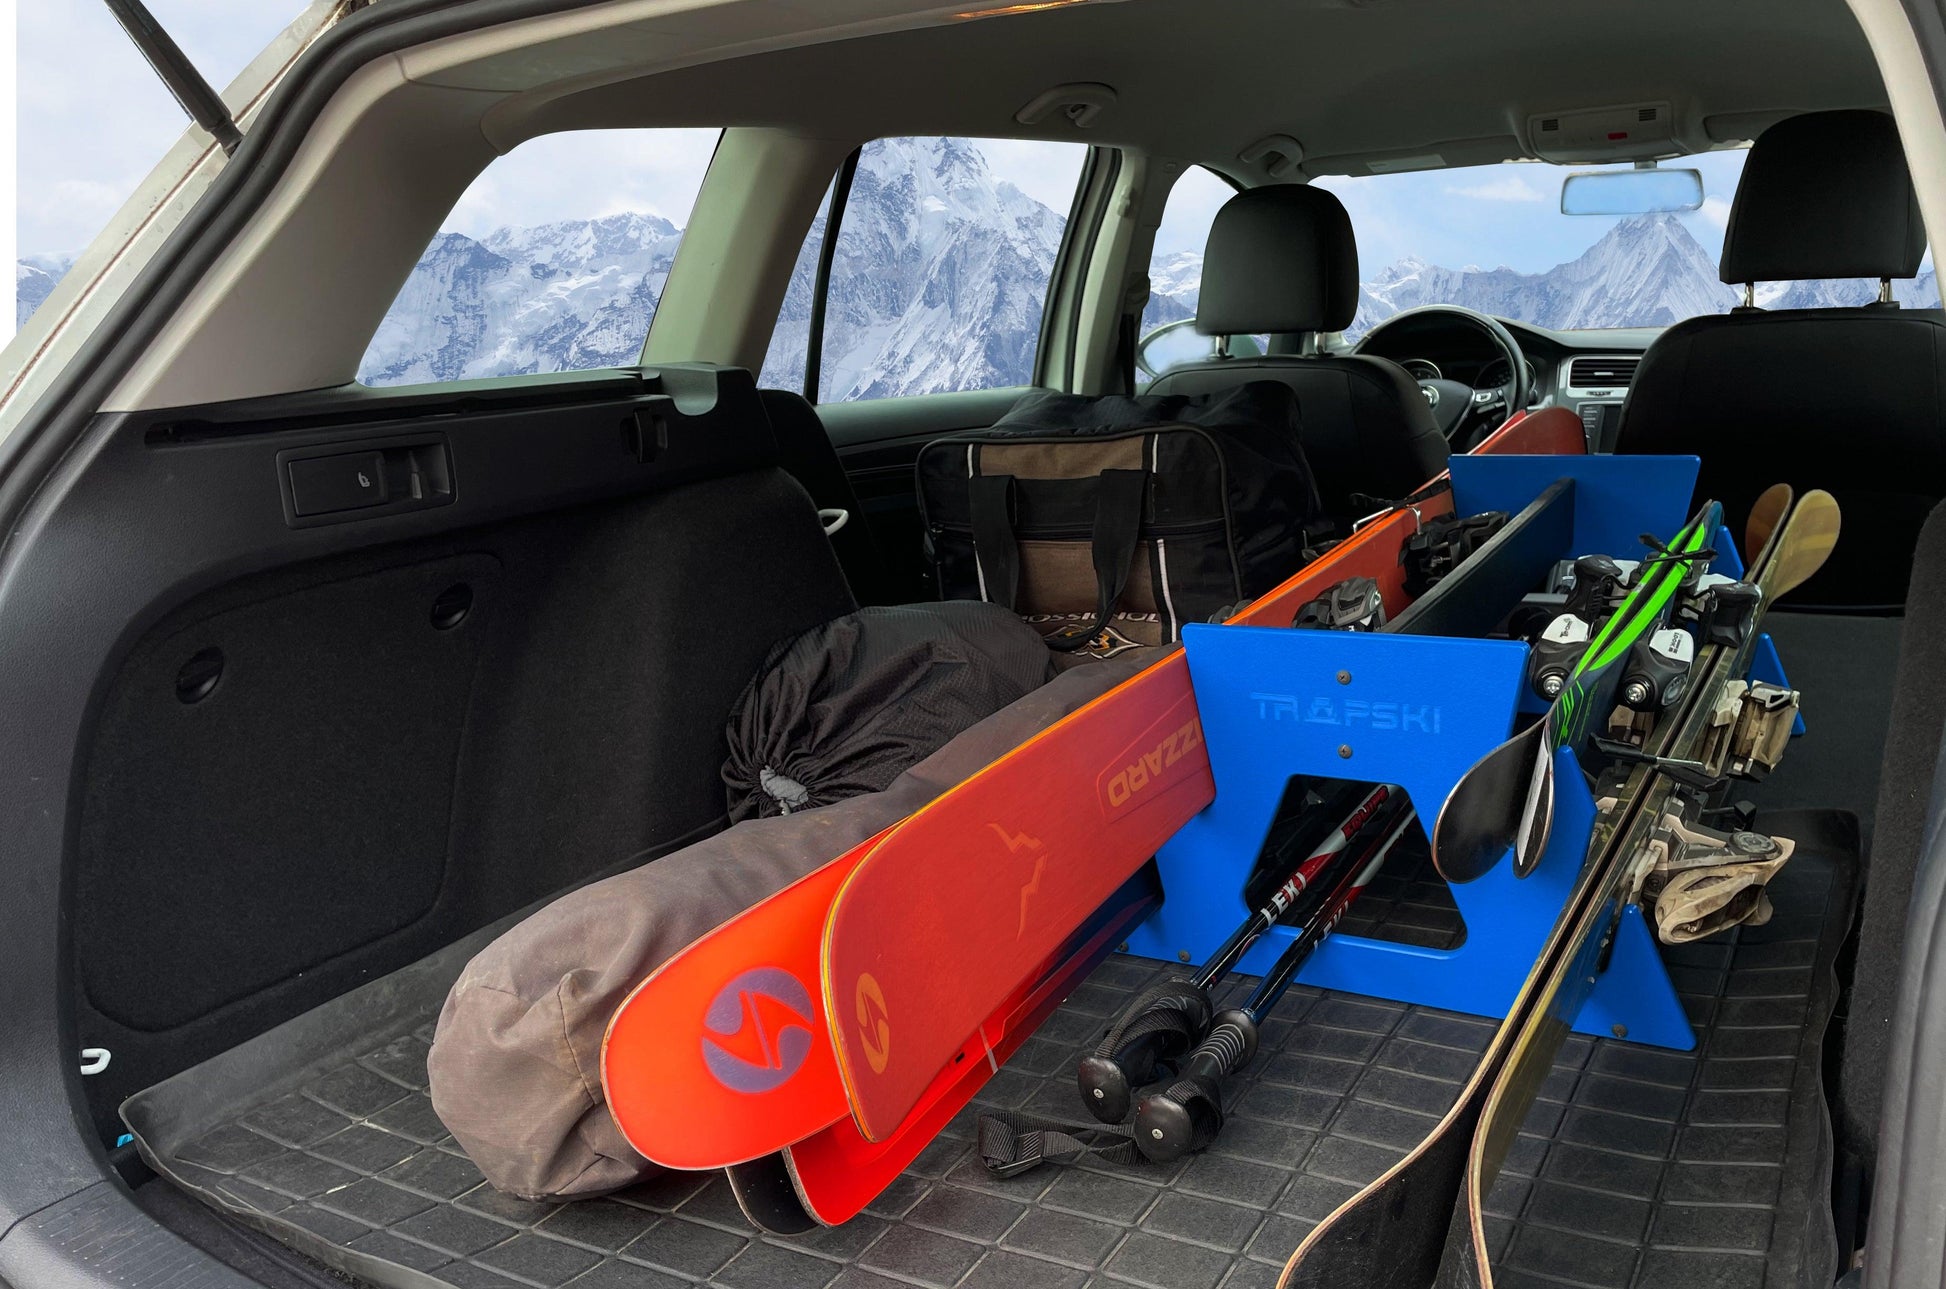 TRAPSKI QUAD Mobile All Mountain Ski and Standard Stance Snowboard Rack - TRAPSKI, LLC